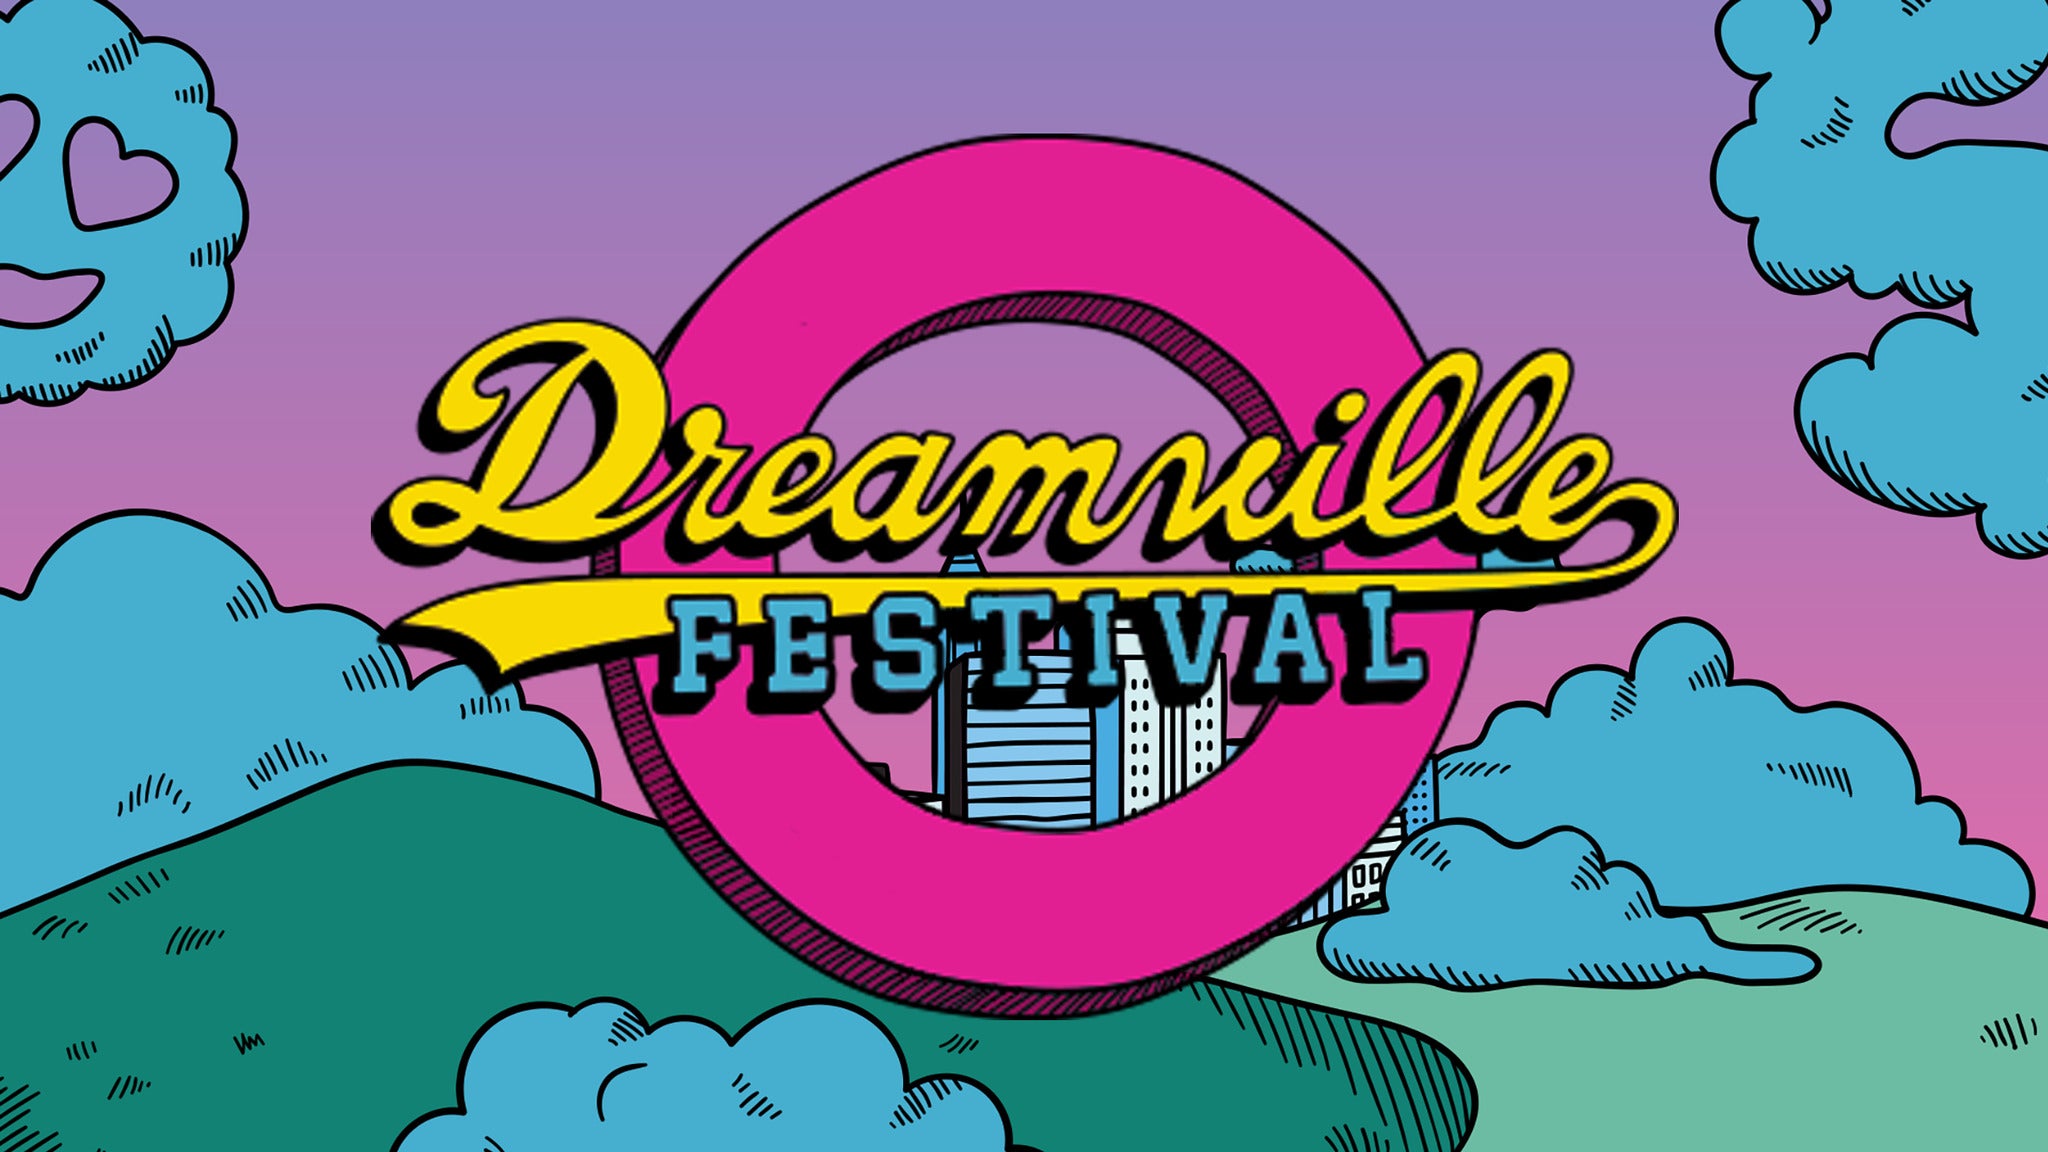 Dreamville Festival presale information on freepresalepasswords.com